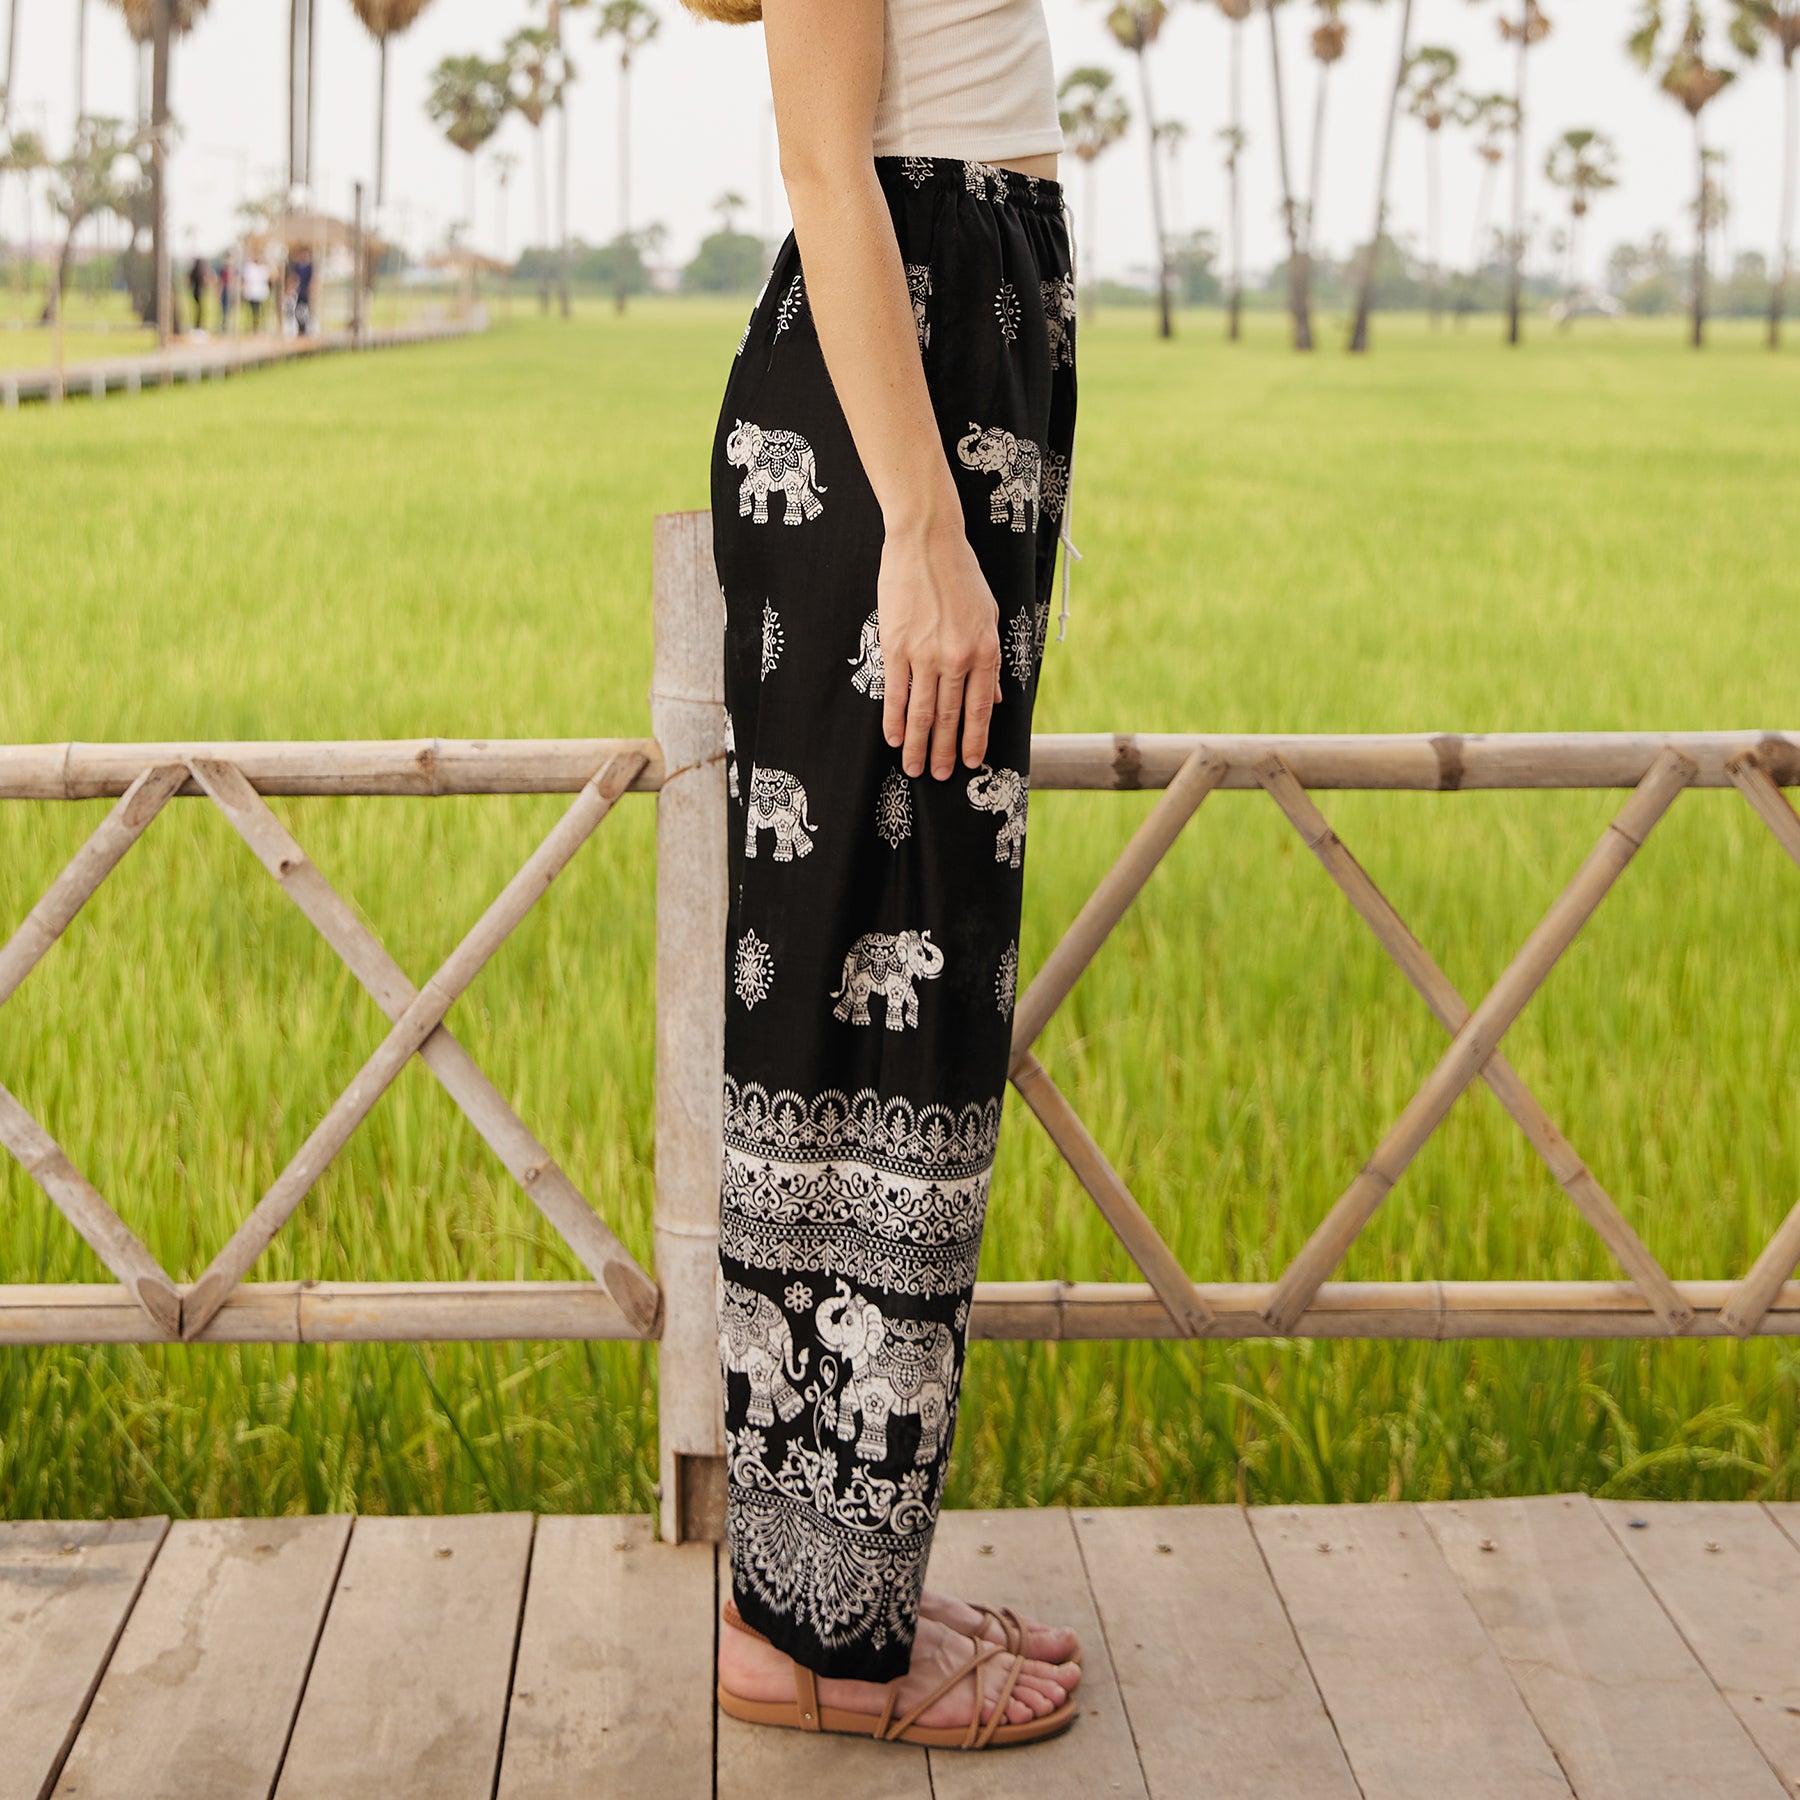 Bangkokpants Women's Yoga Clothing Elephant Pants Black US Size 0-12